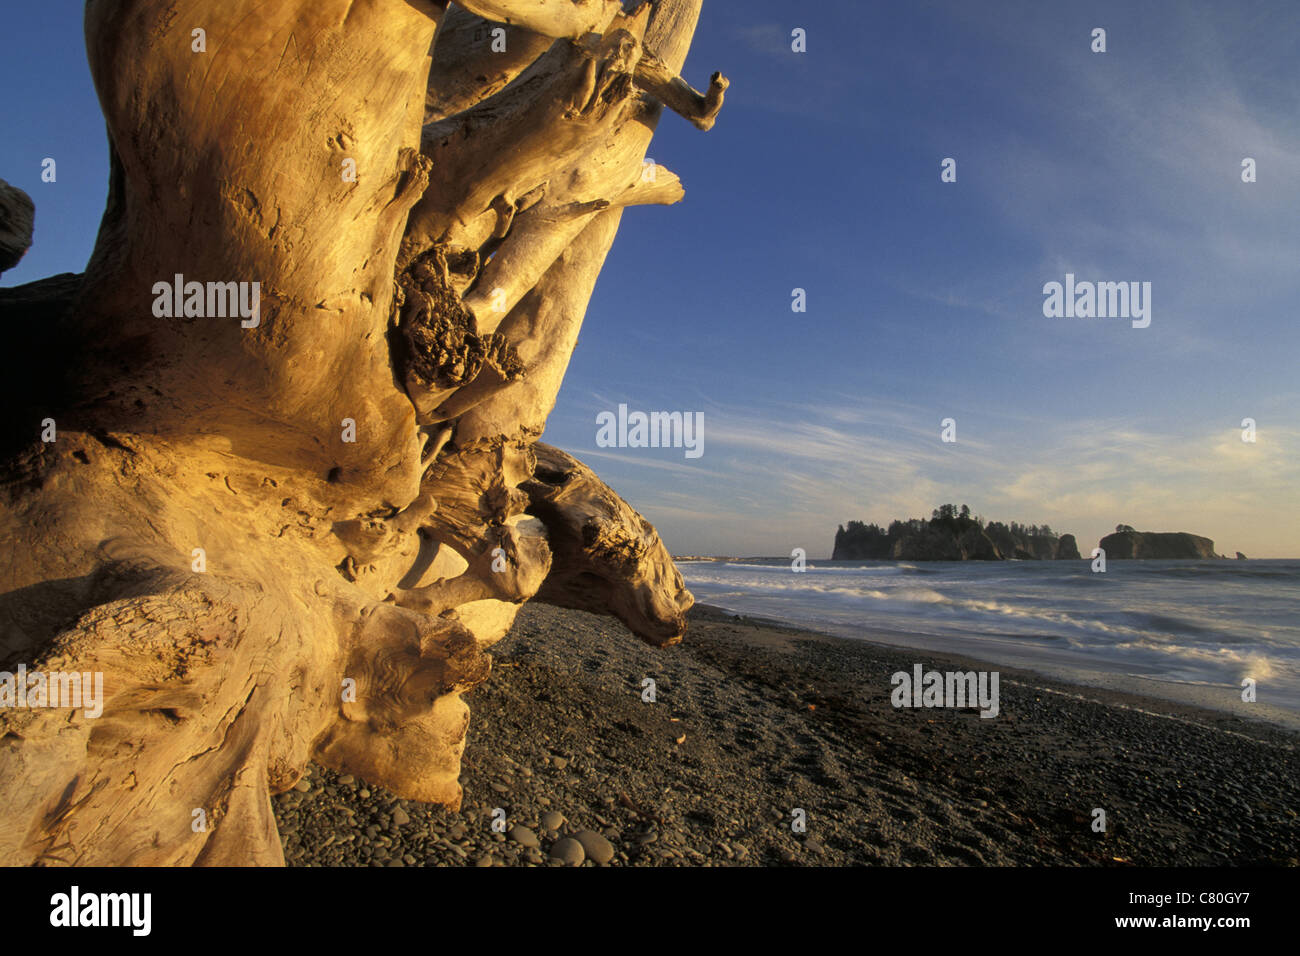 USA, North America, Washington State, Olympic Park, Rialto Beach. Stock Photo